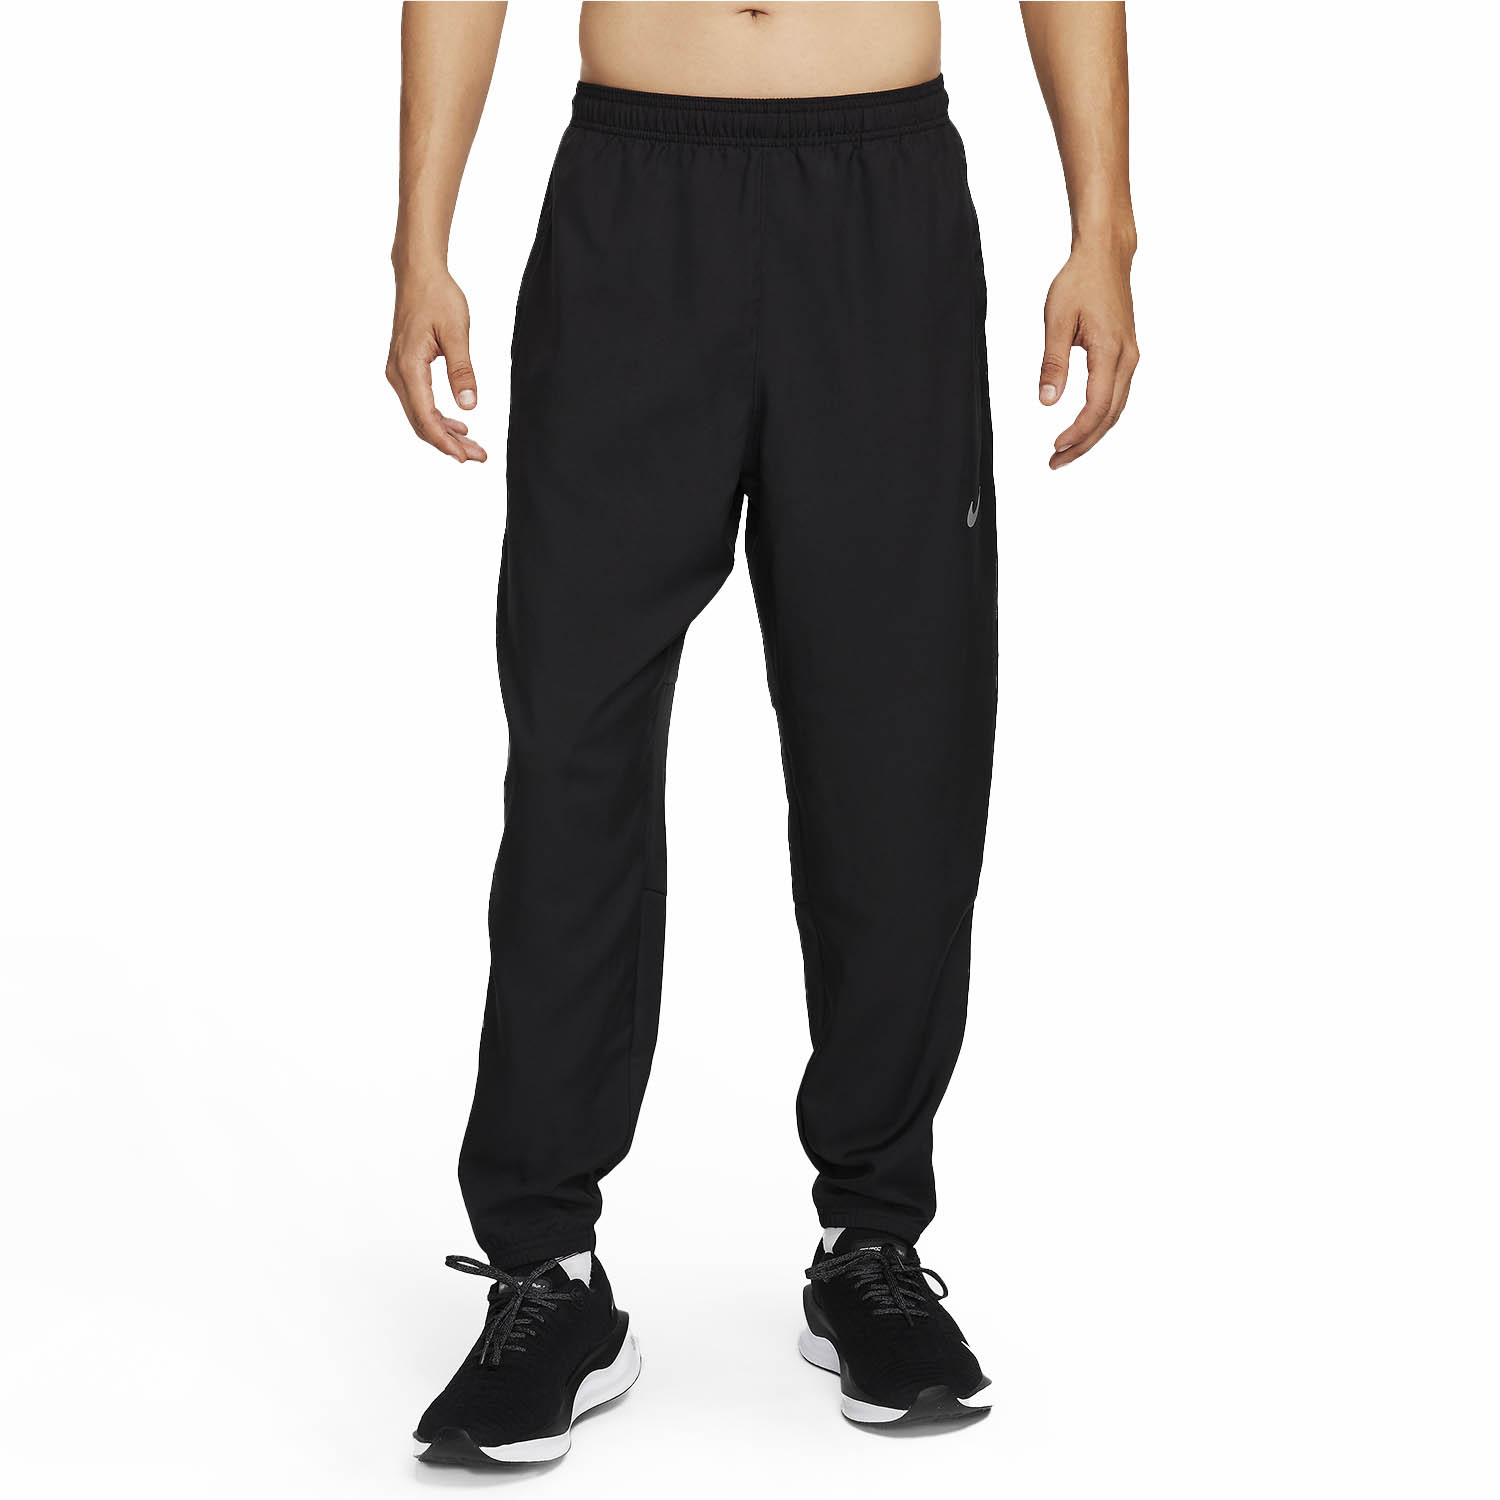 Nike Challenger Pants - Black/Reflective Silver